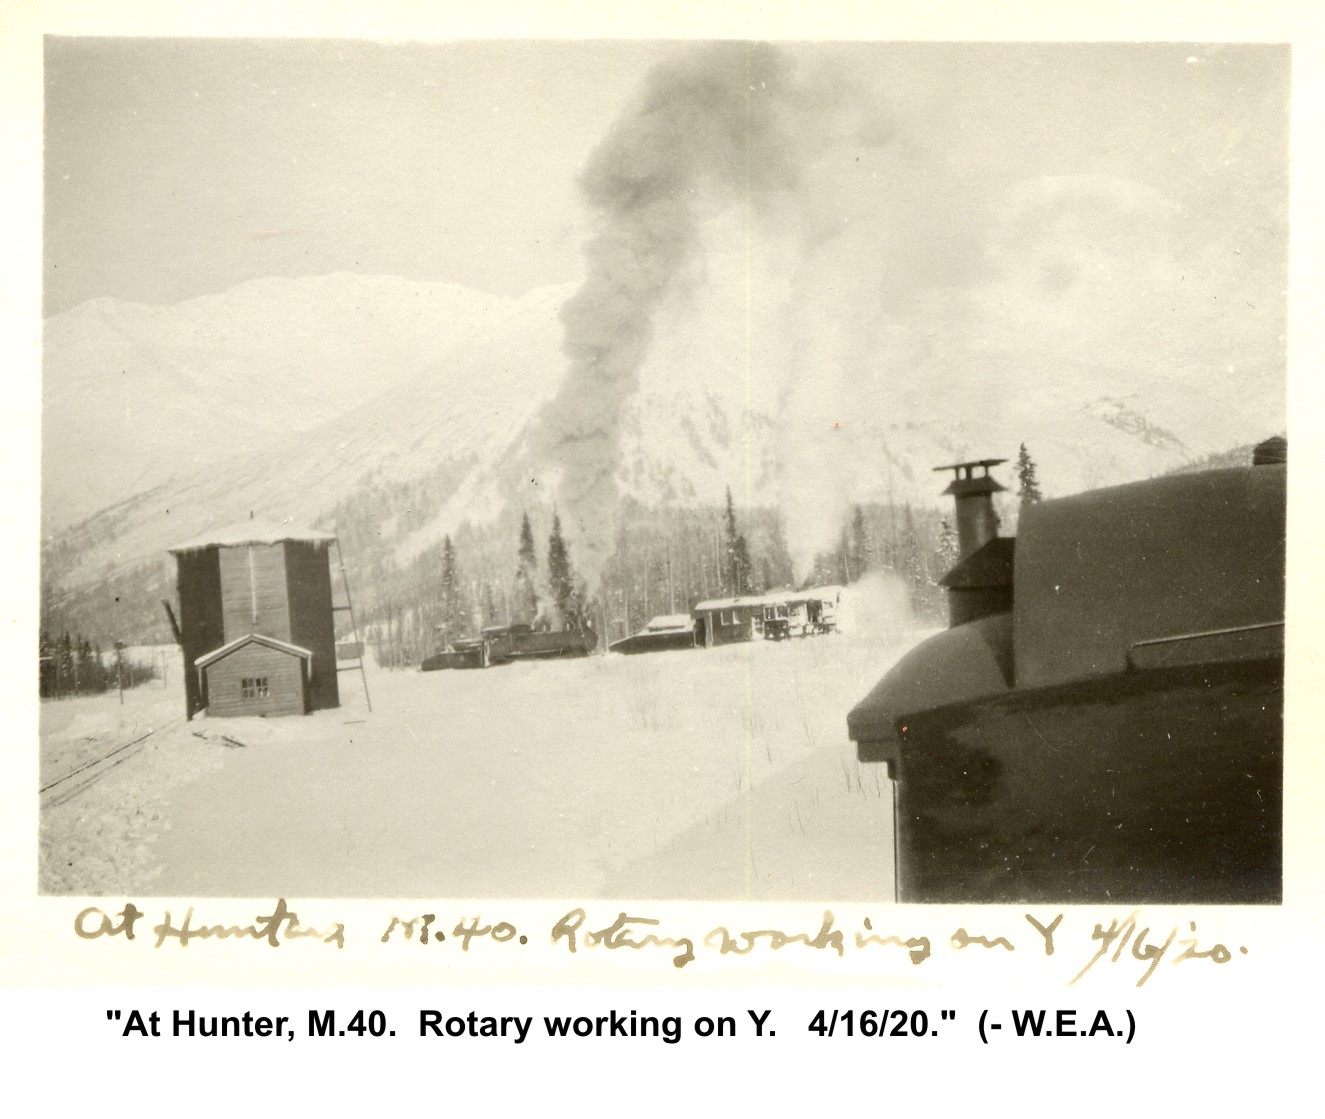 Alaskan Railroad in 1920